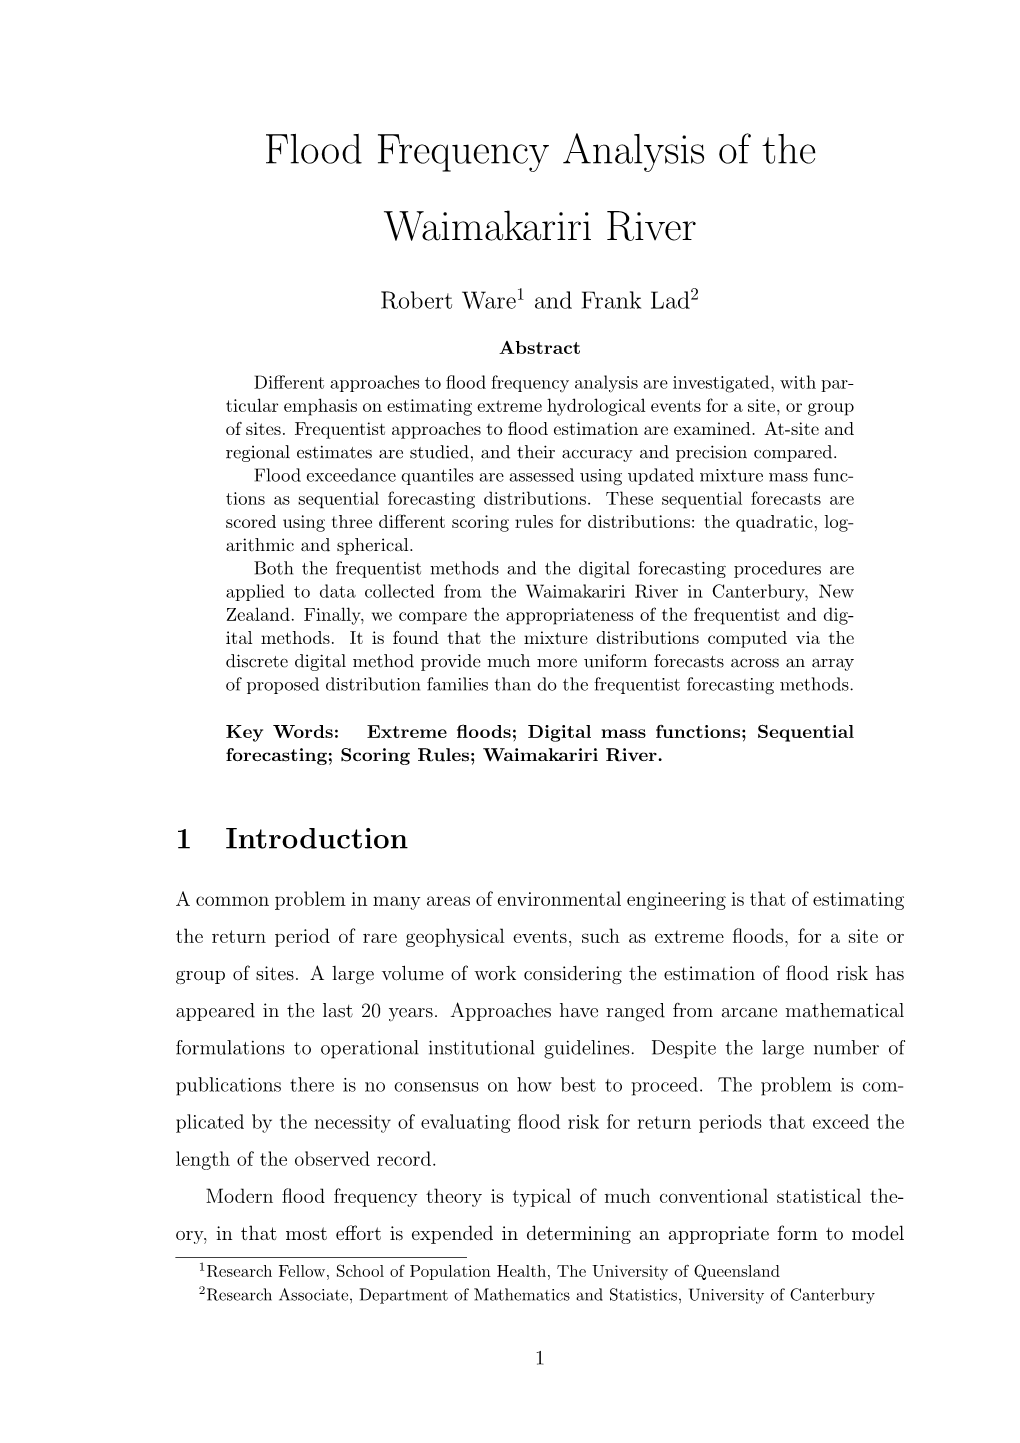 Flood Frequency Analysis of the Waimakariri River